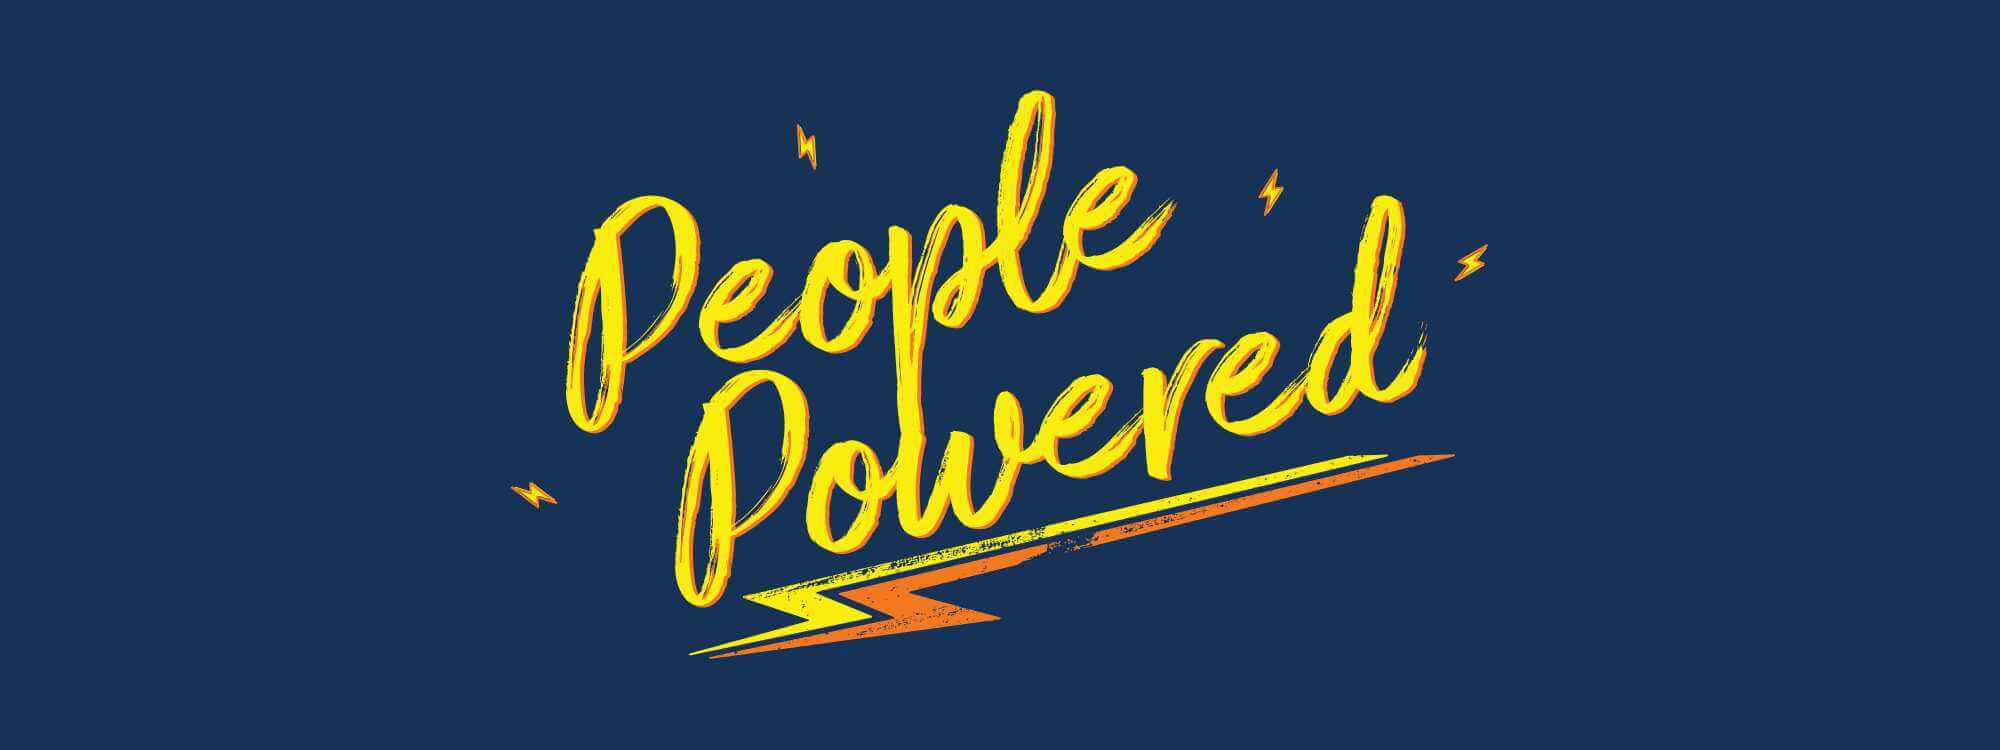 People Powered